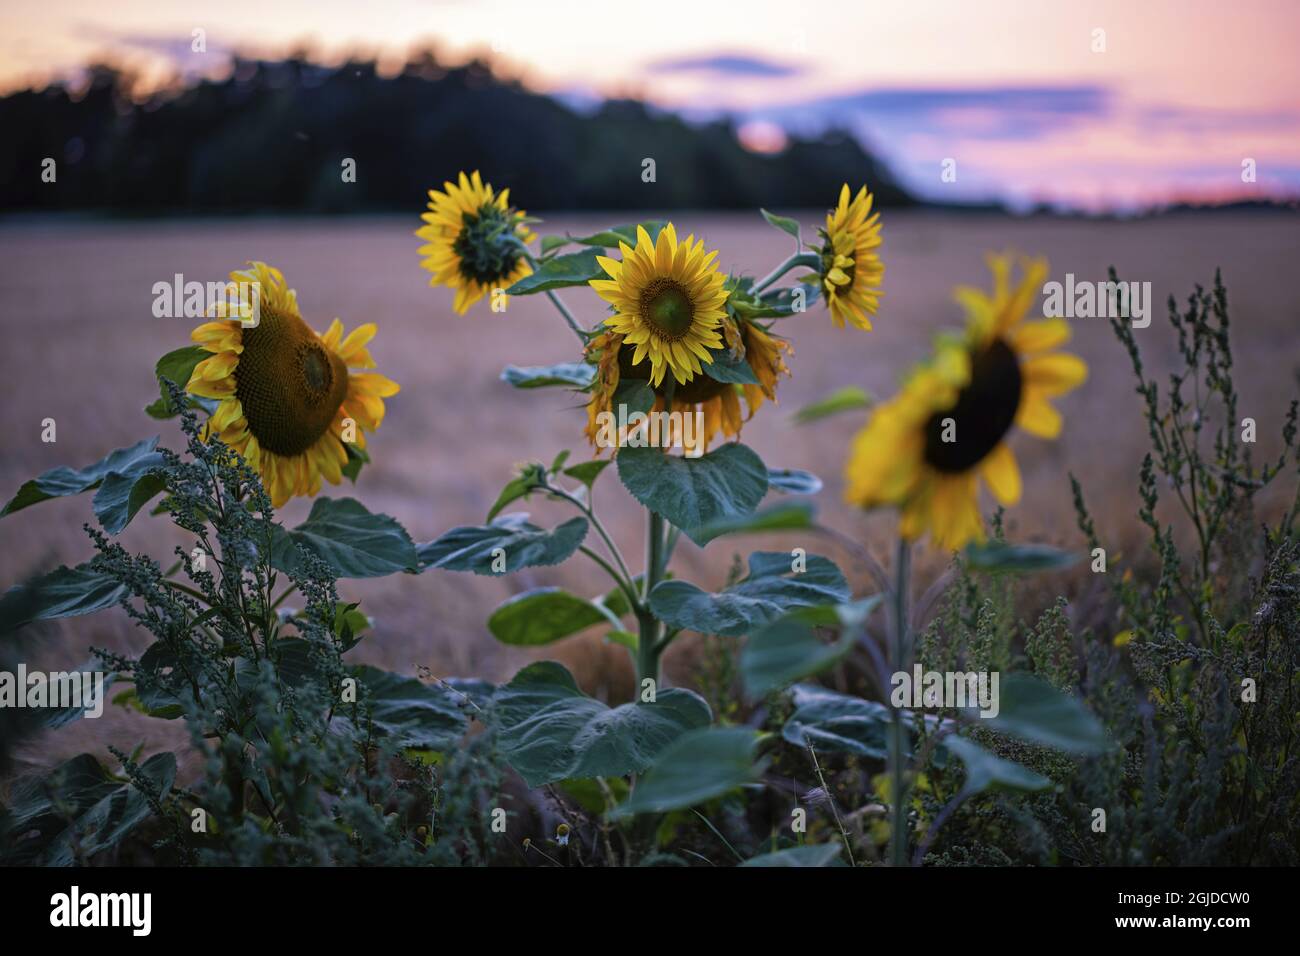 Common Sunflower (Helianthus annuus), Gotland. Helianthus annuus Linné Photo: Magnus Martinsson / TT / code 2734  Stock Photo